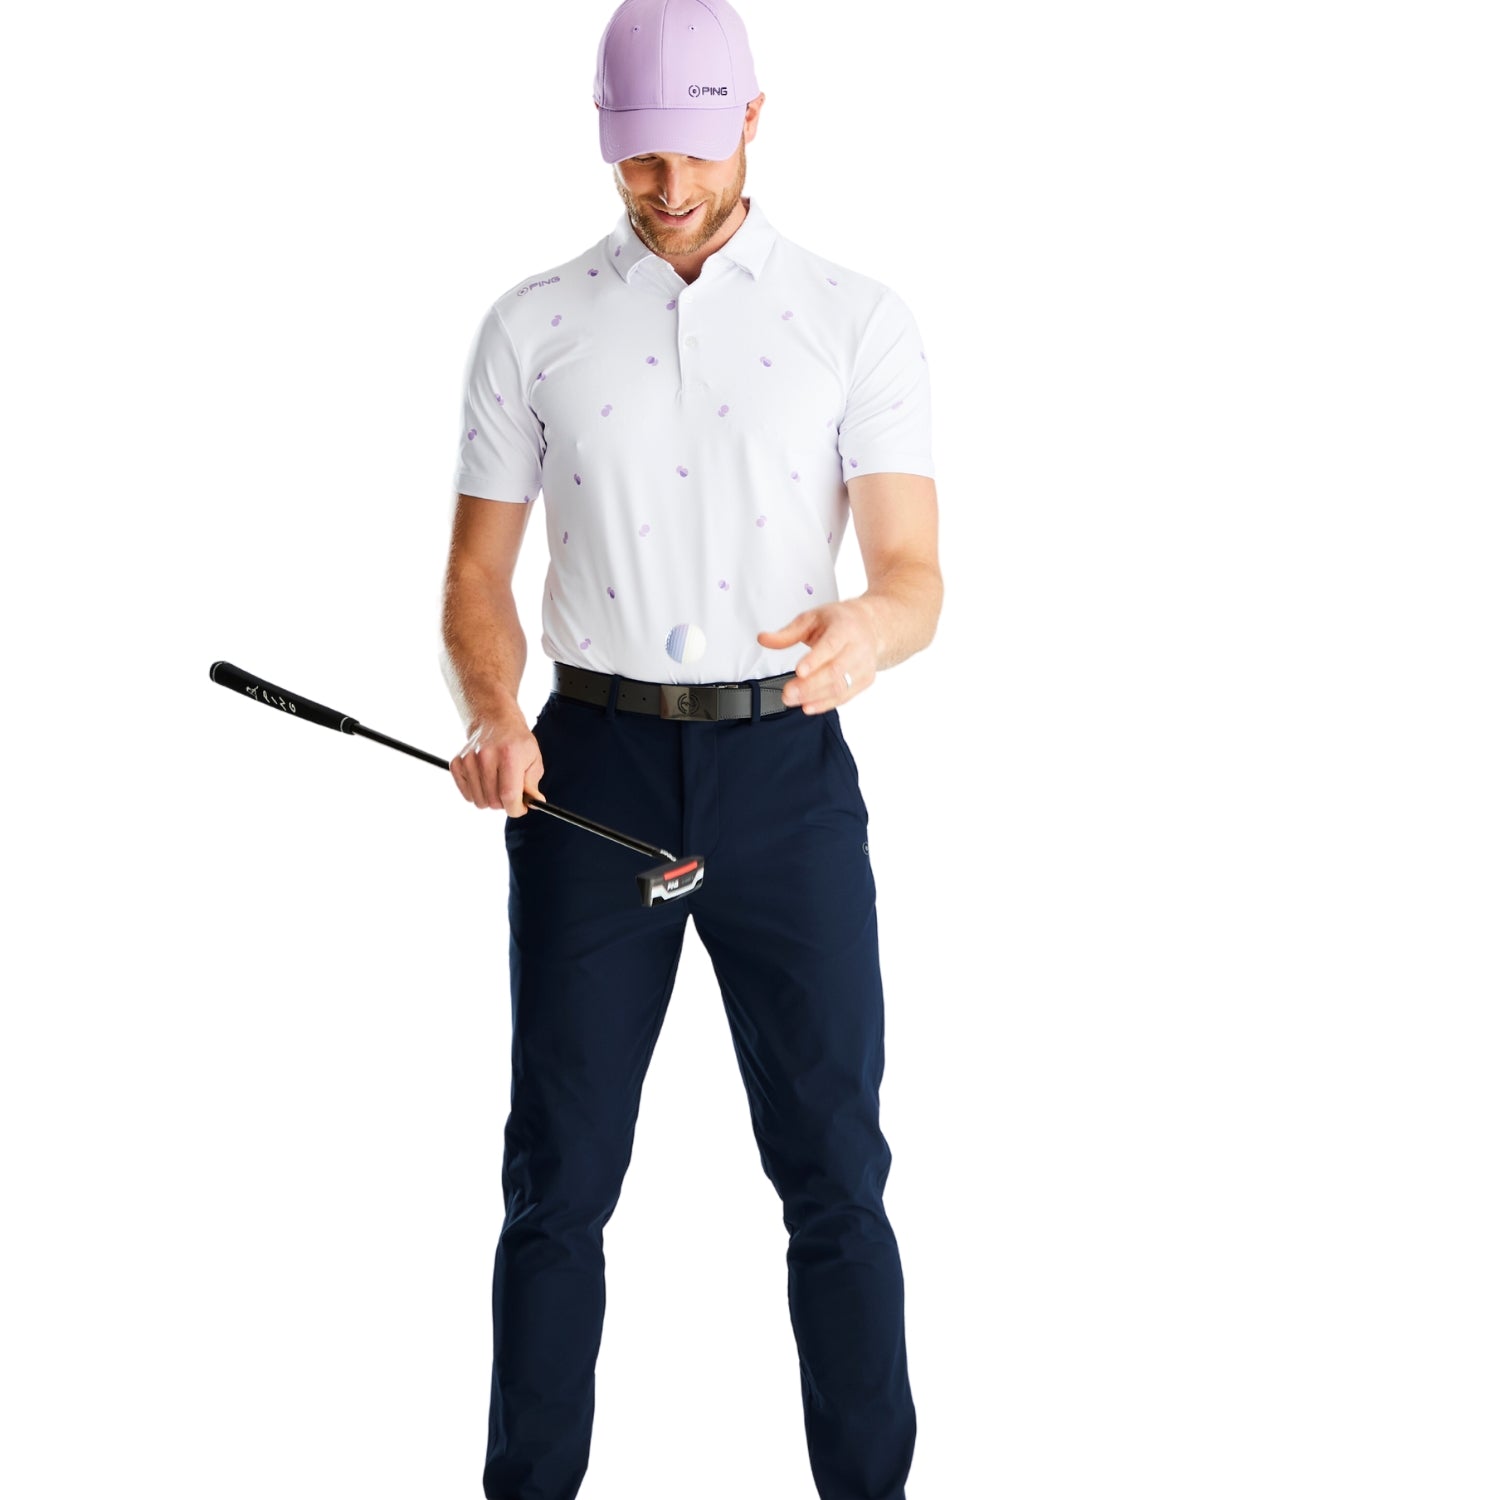 Ping Two Tone Mens Golf Polo Shirt